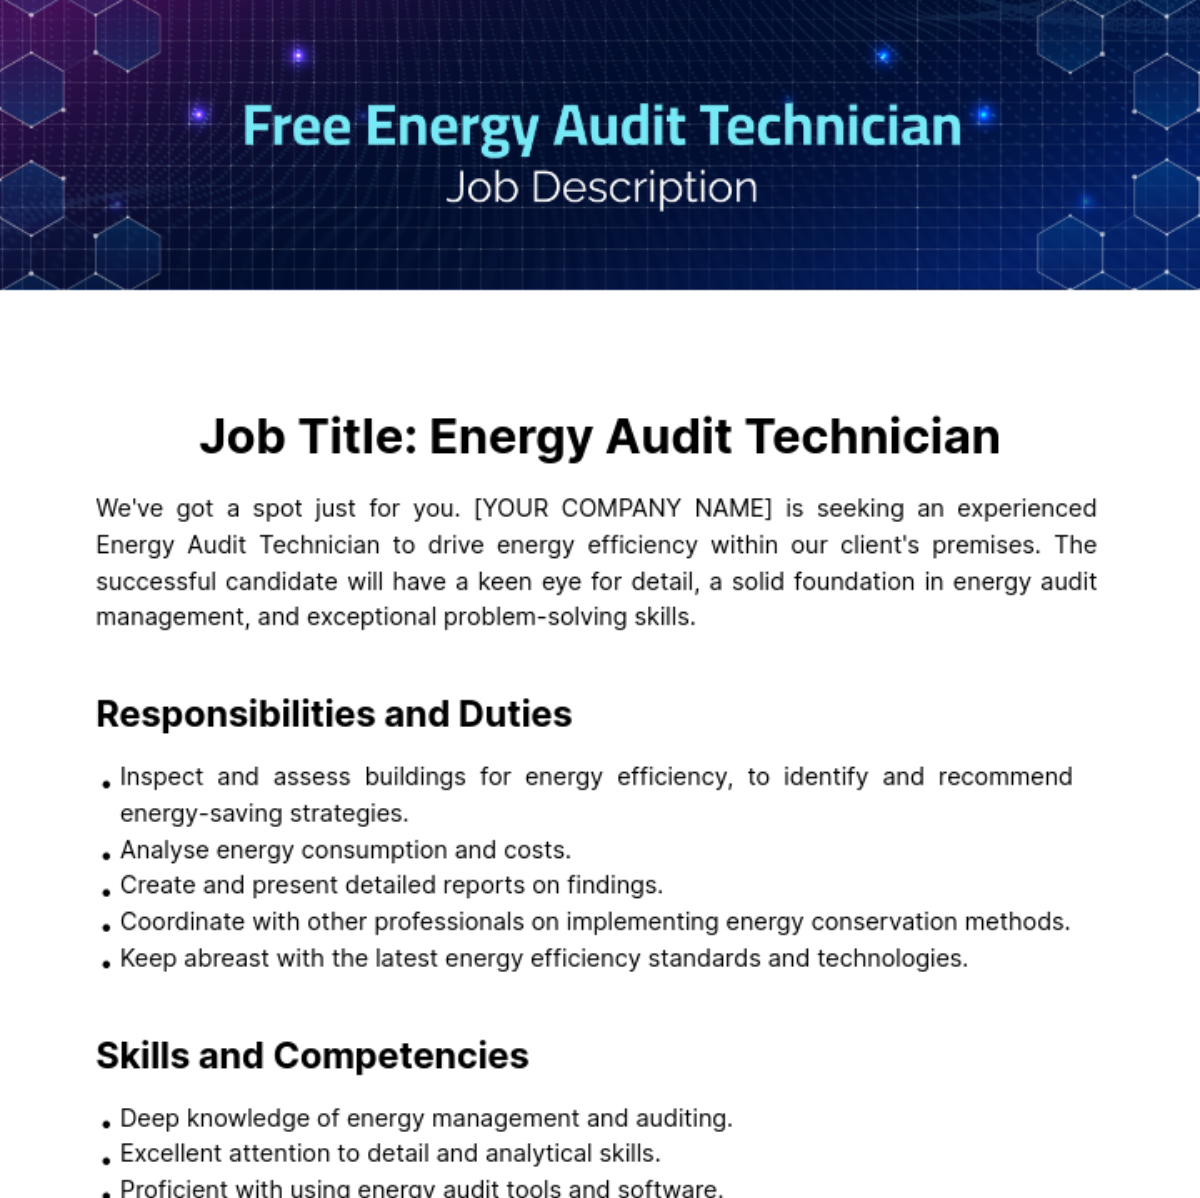 Free Energy Audit Technician Job Description Template